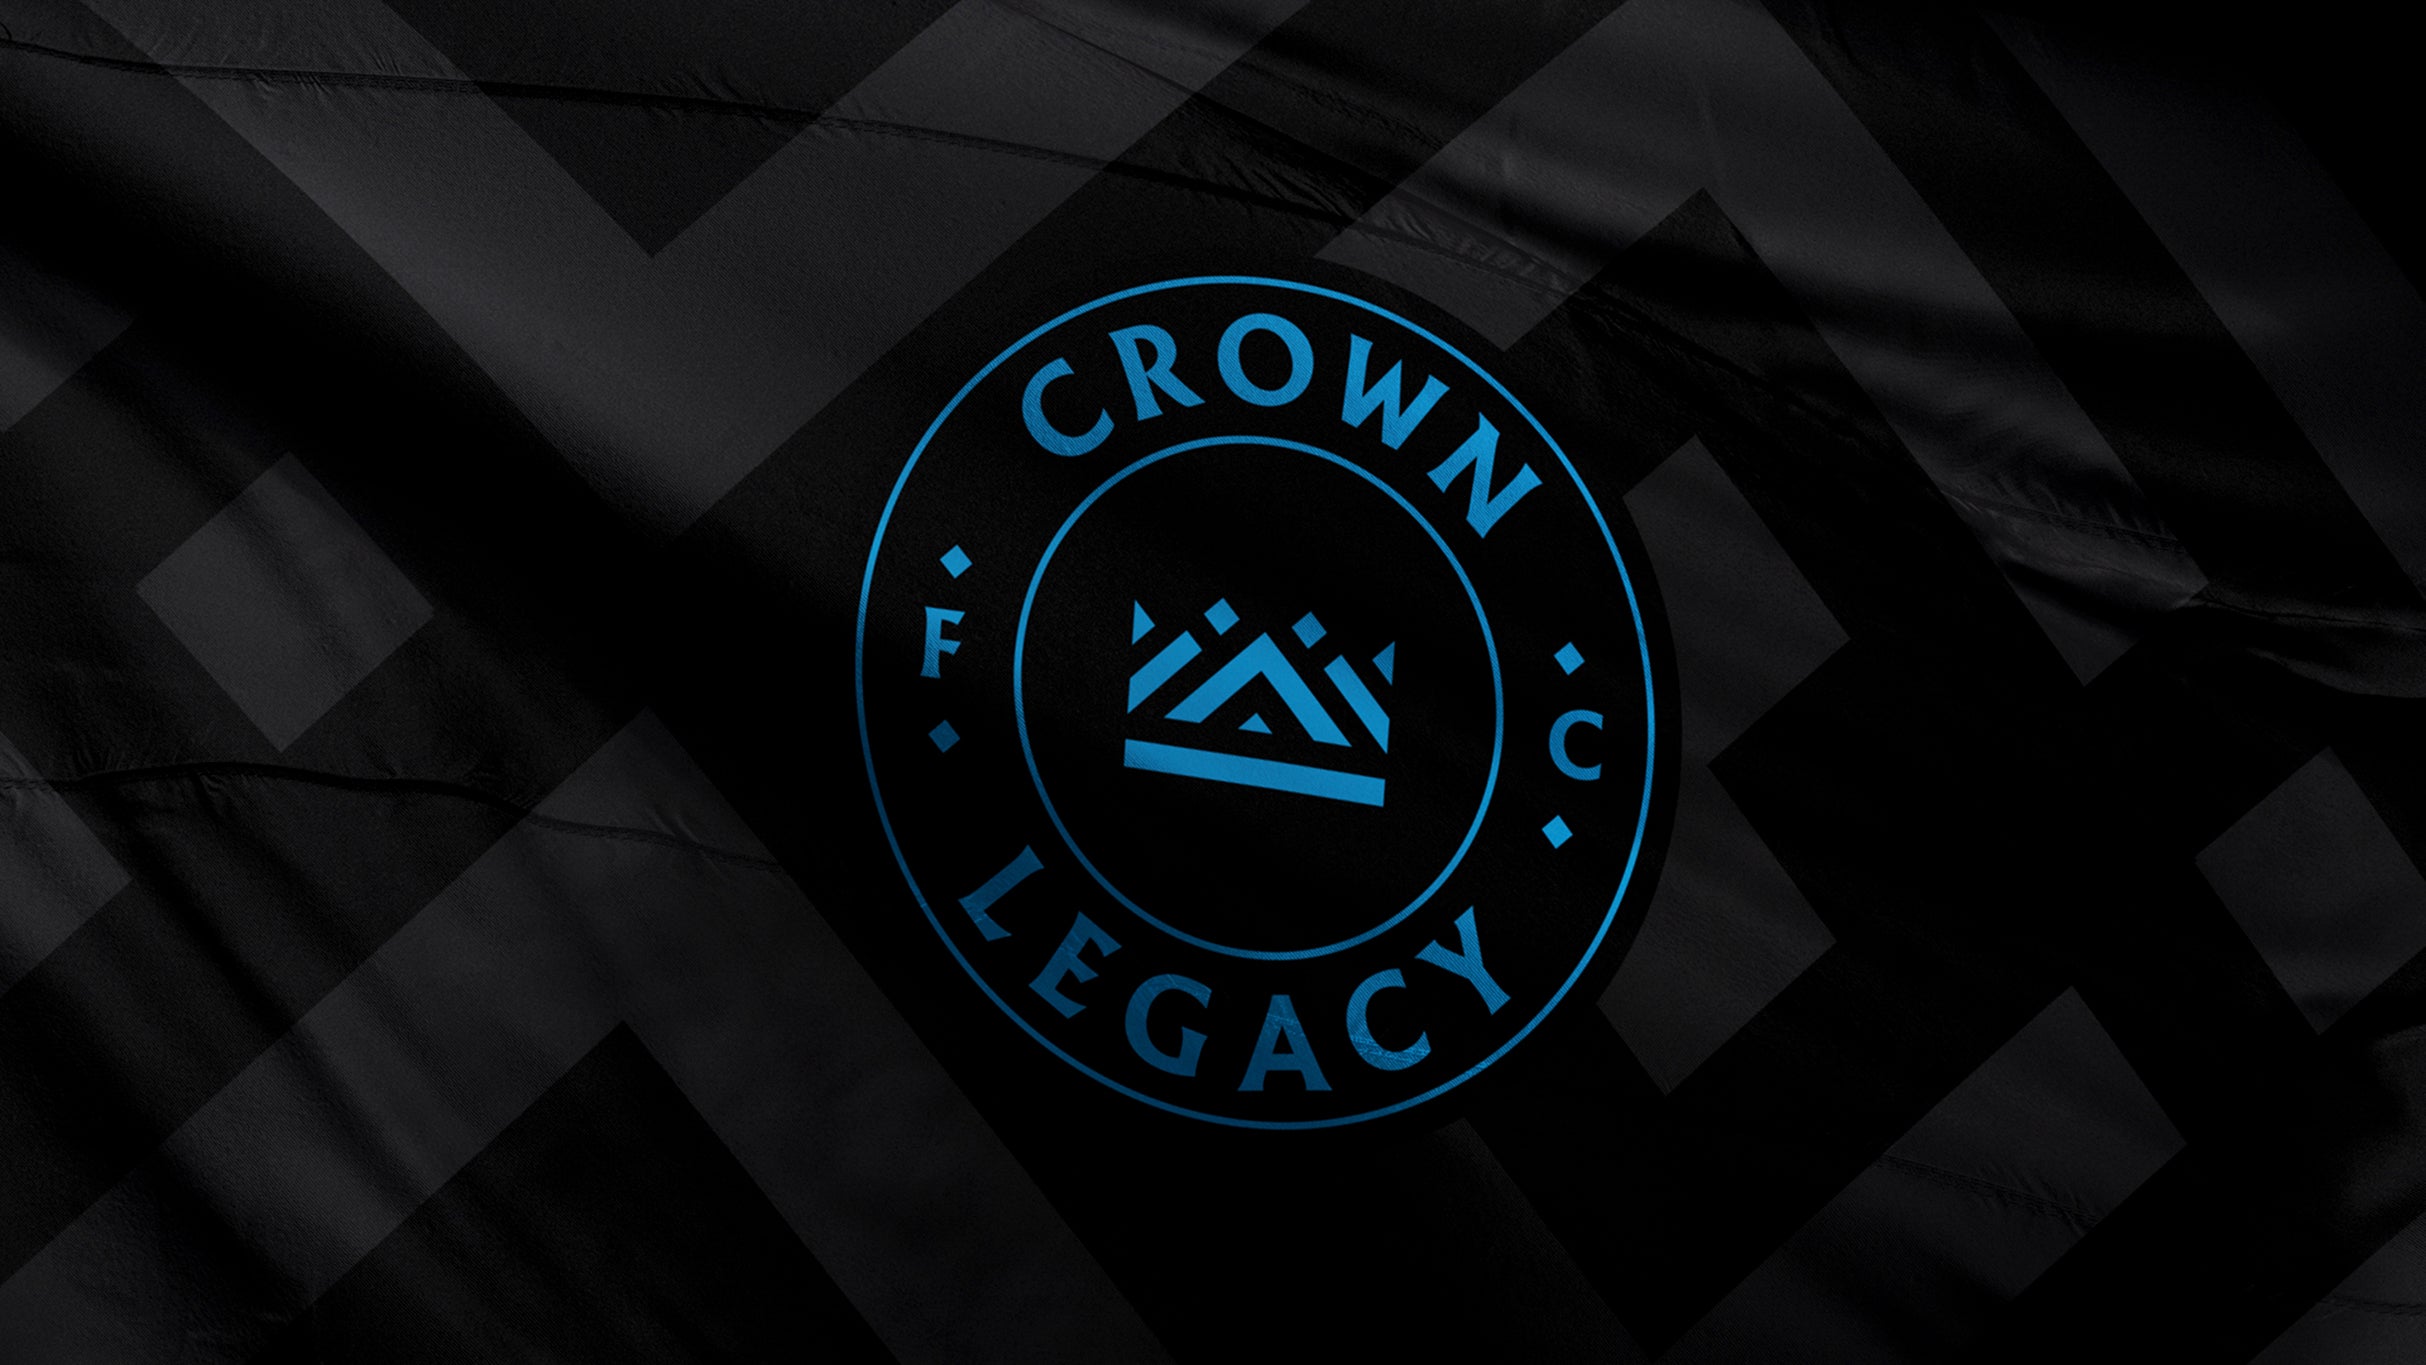 Crown Legacy FC vs. Inter Miami CF II